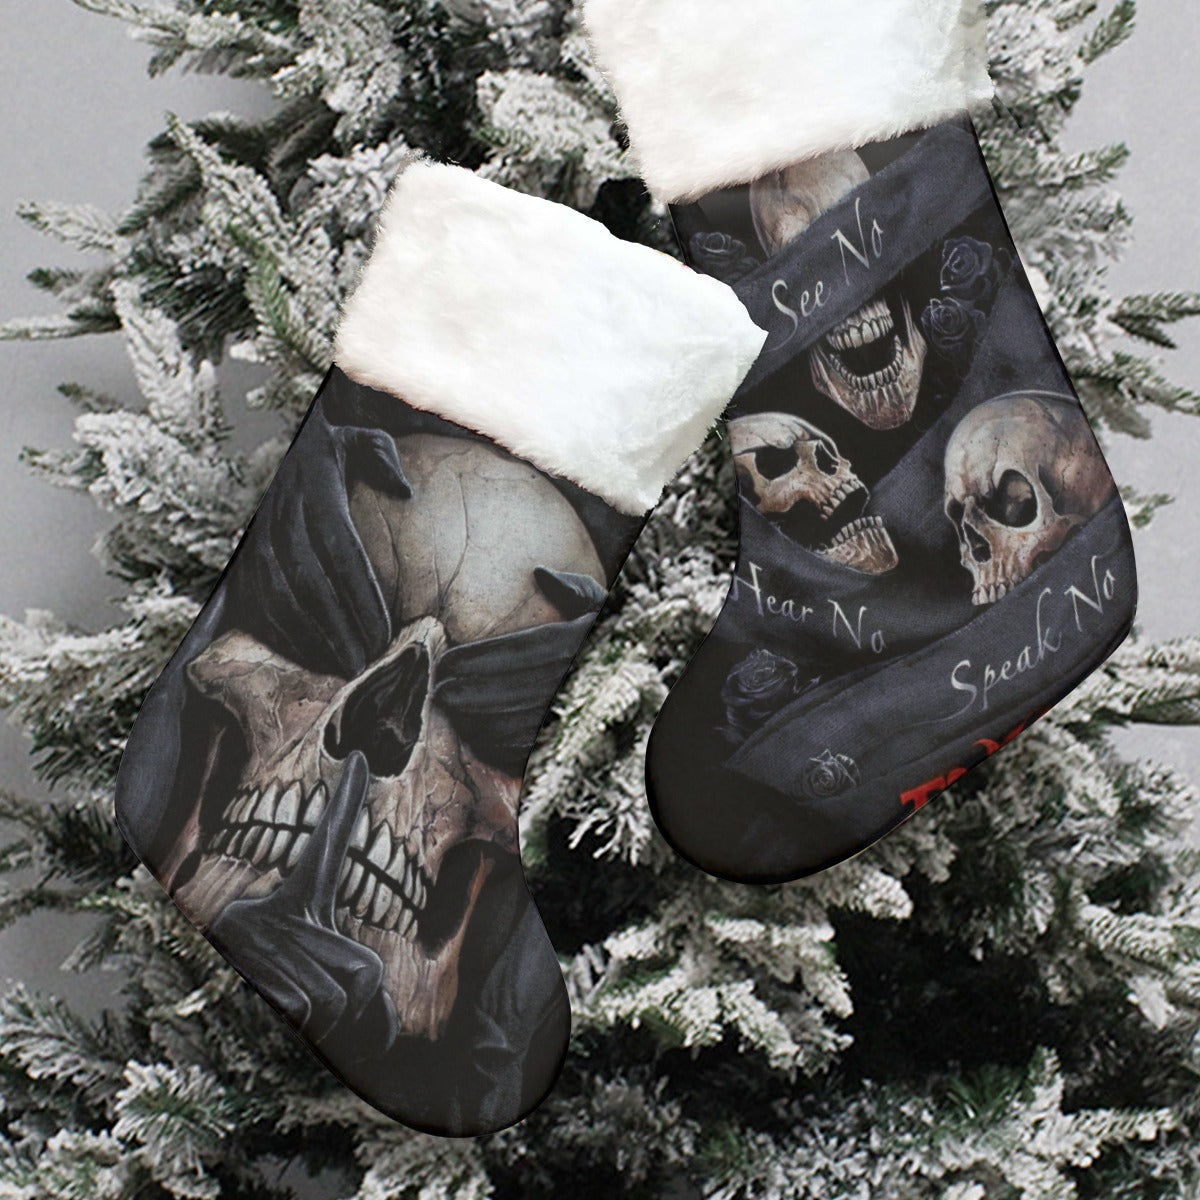 No see no hear no speak evils All-Over Print Christmas Socks